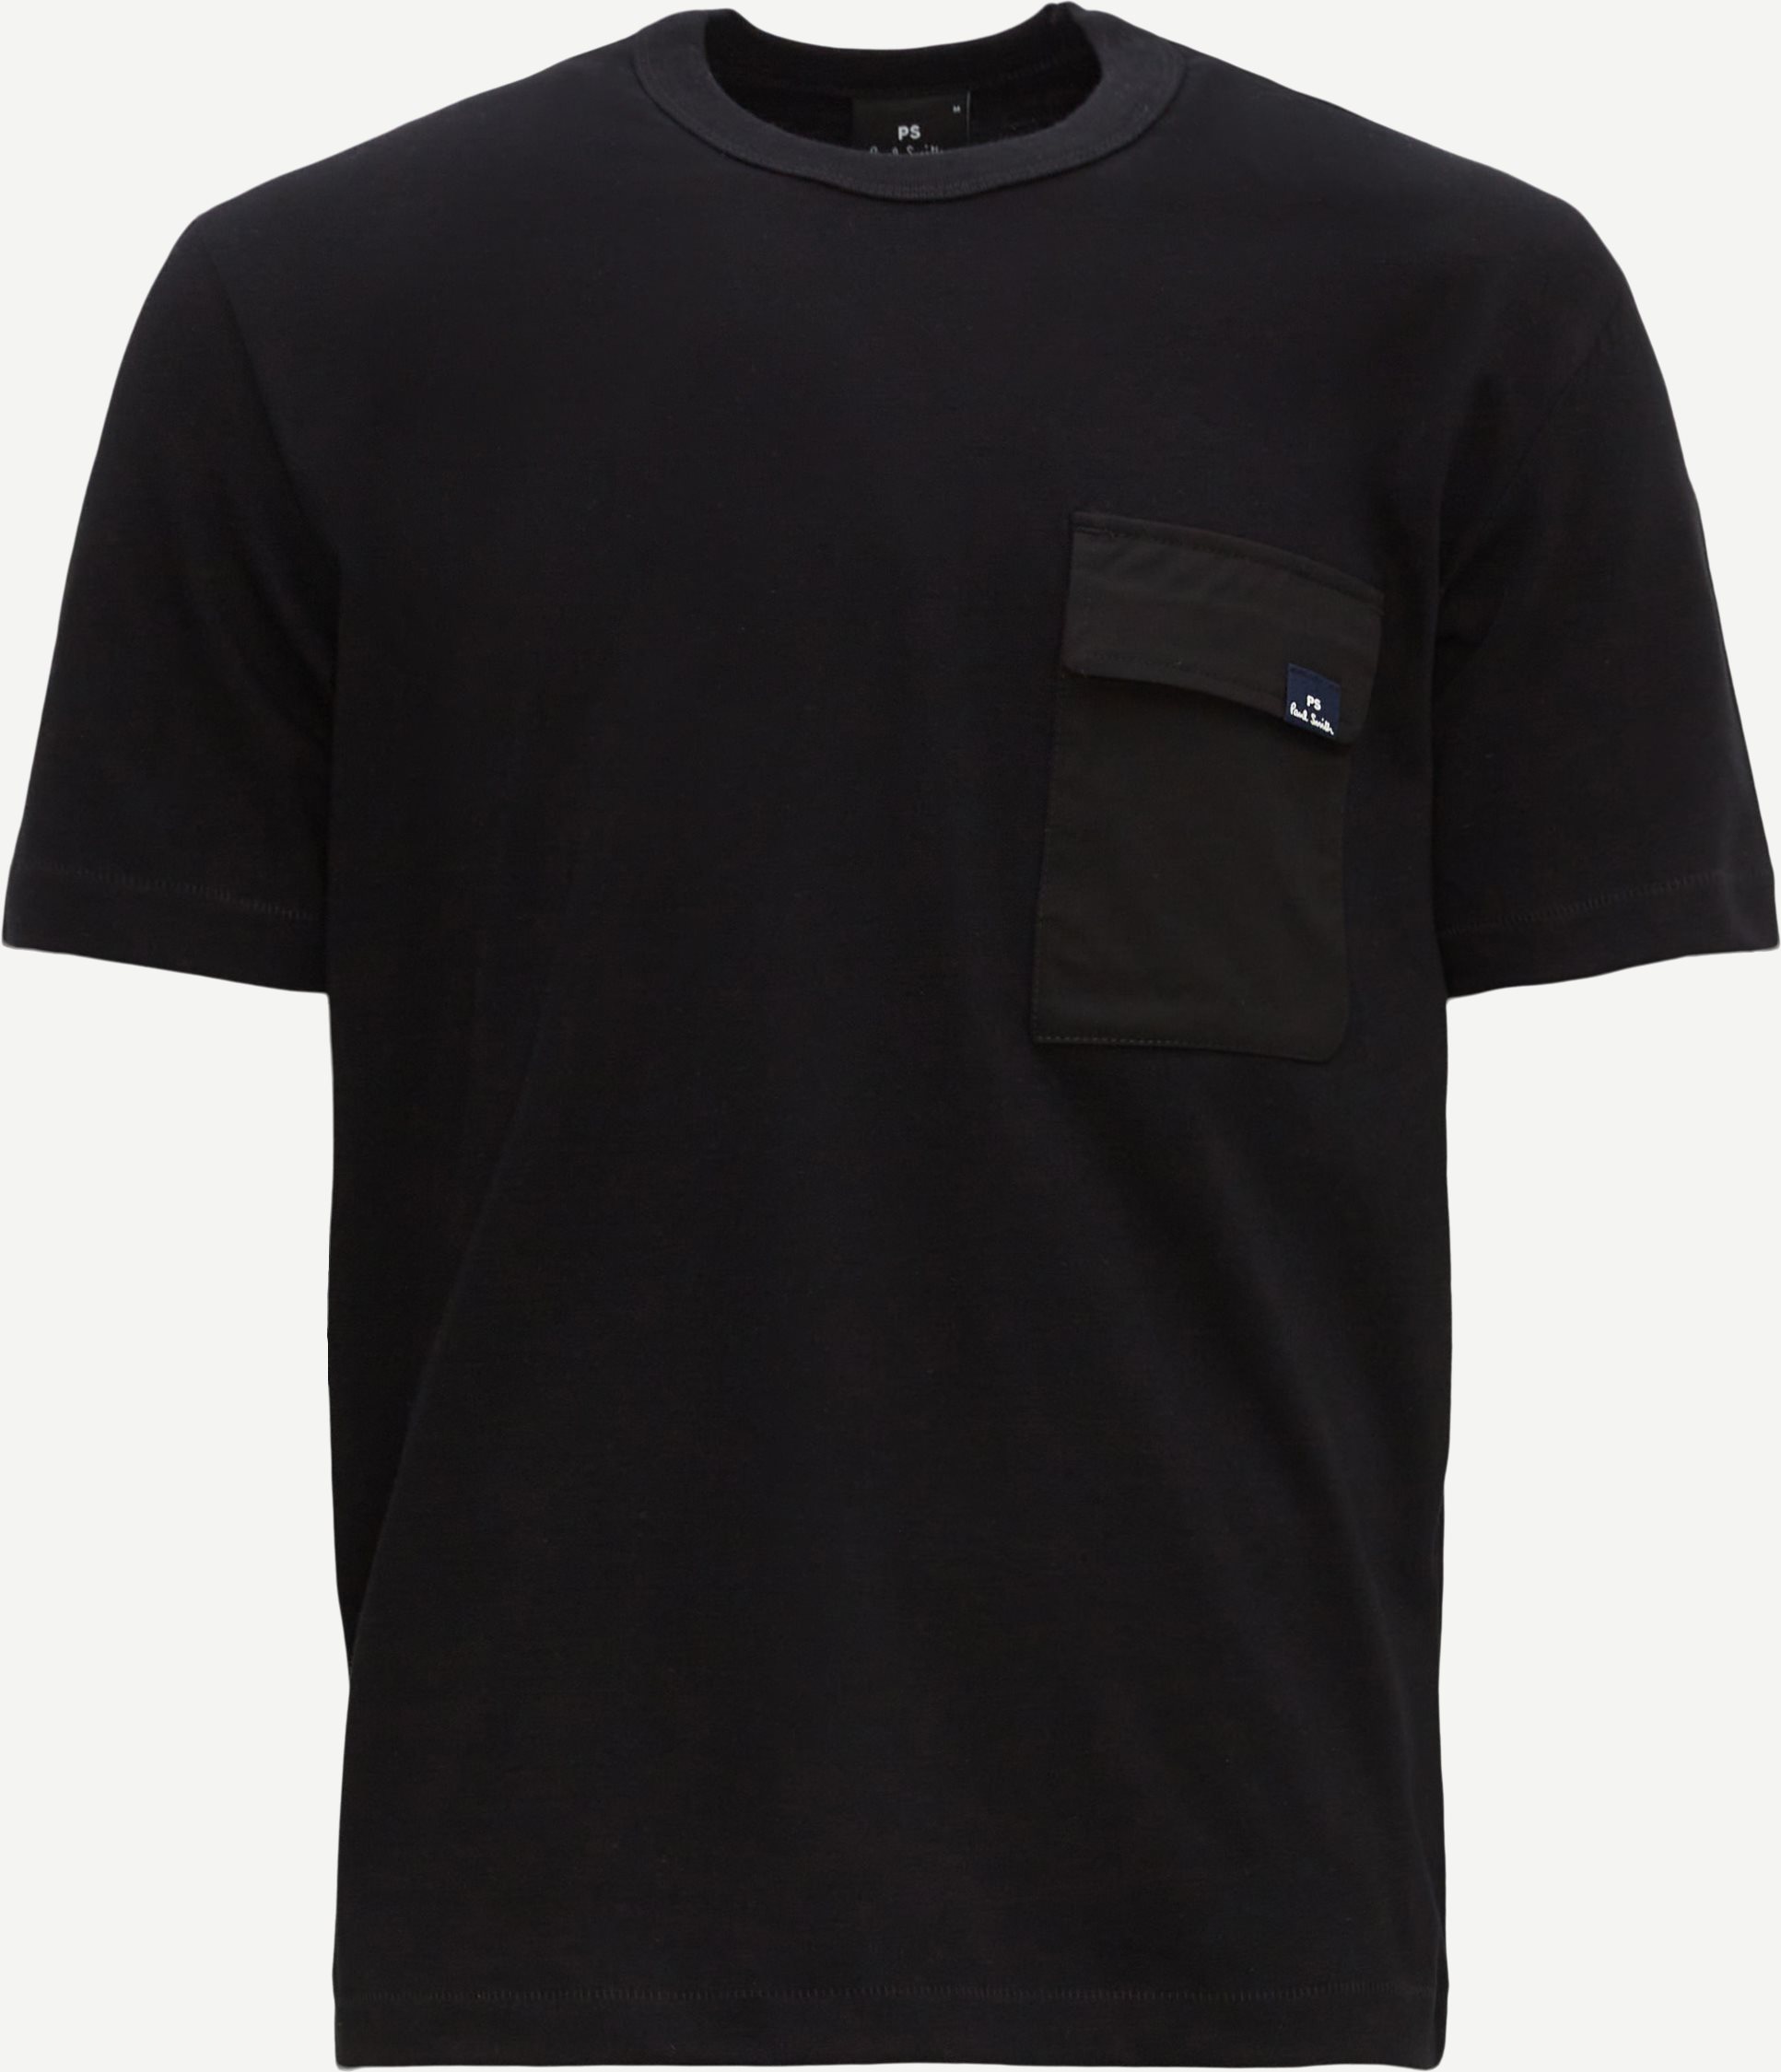 PS Paul Smith T-shirts 978X-K20744 POCKET  Black